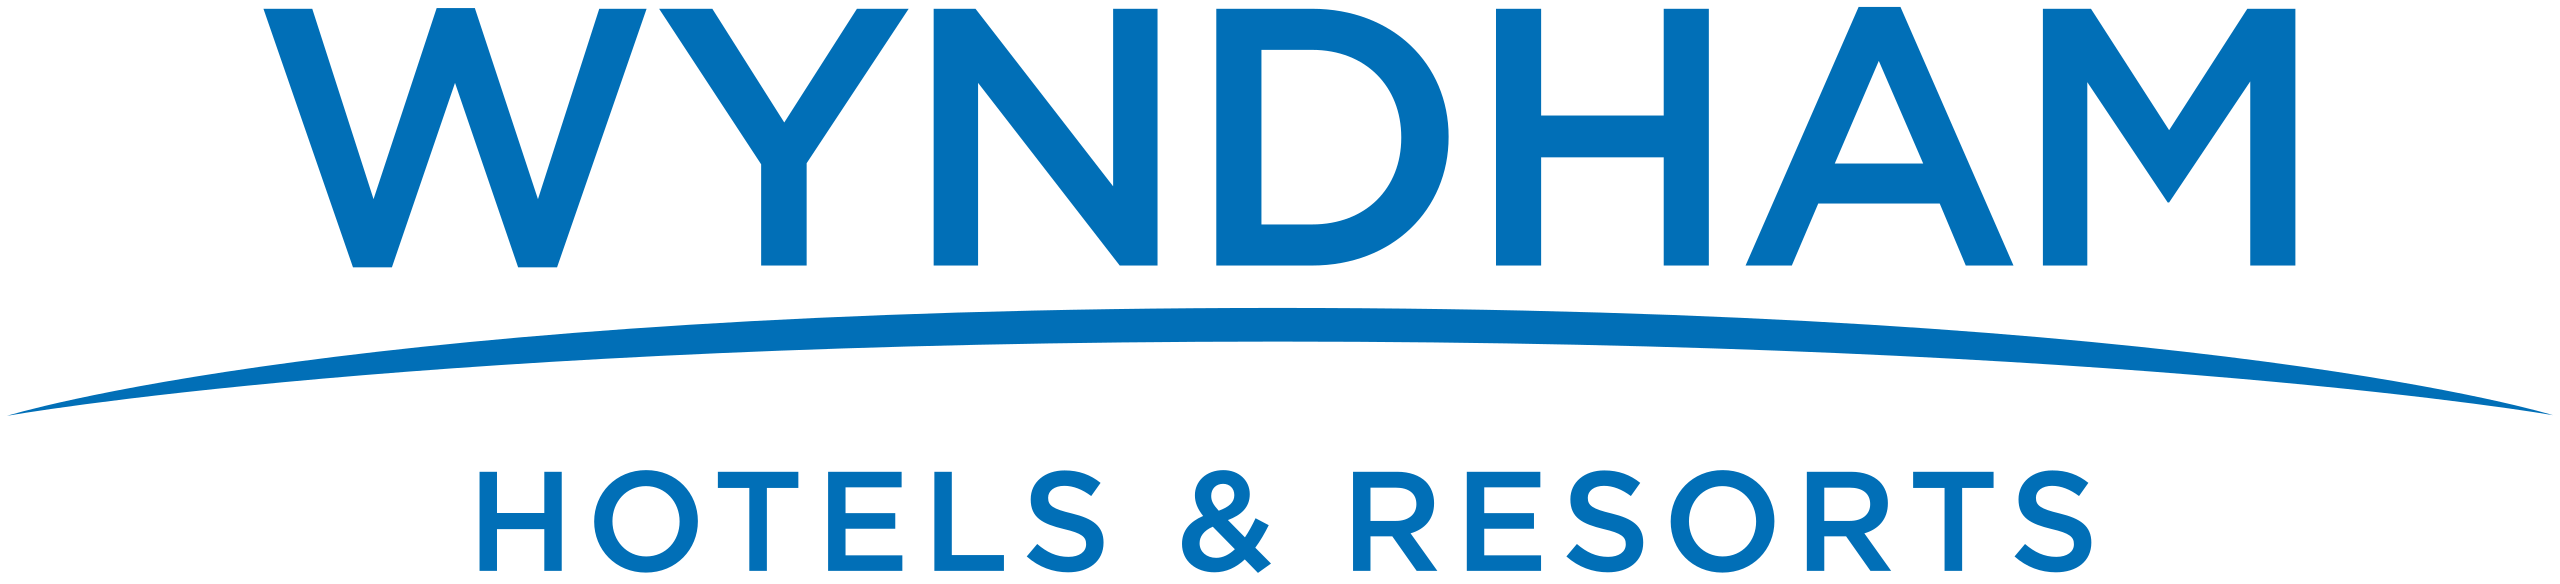 2560px-Wyndham_Hotels_&_Resorts_logo.svg